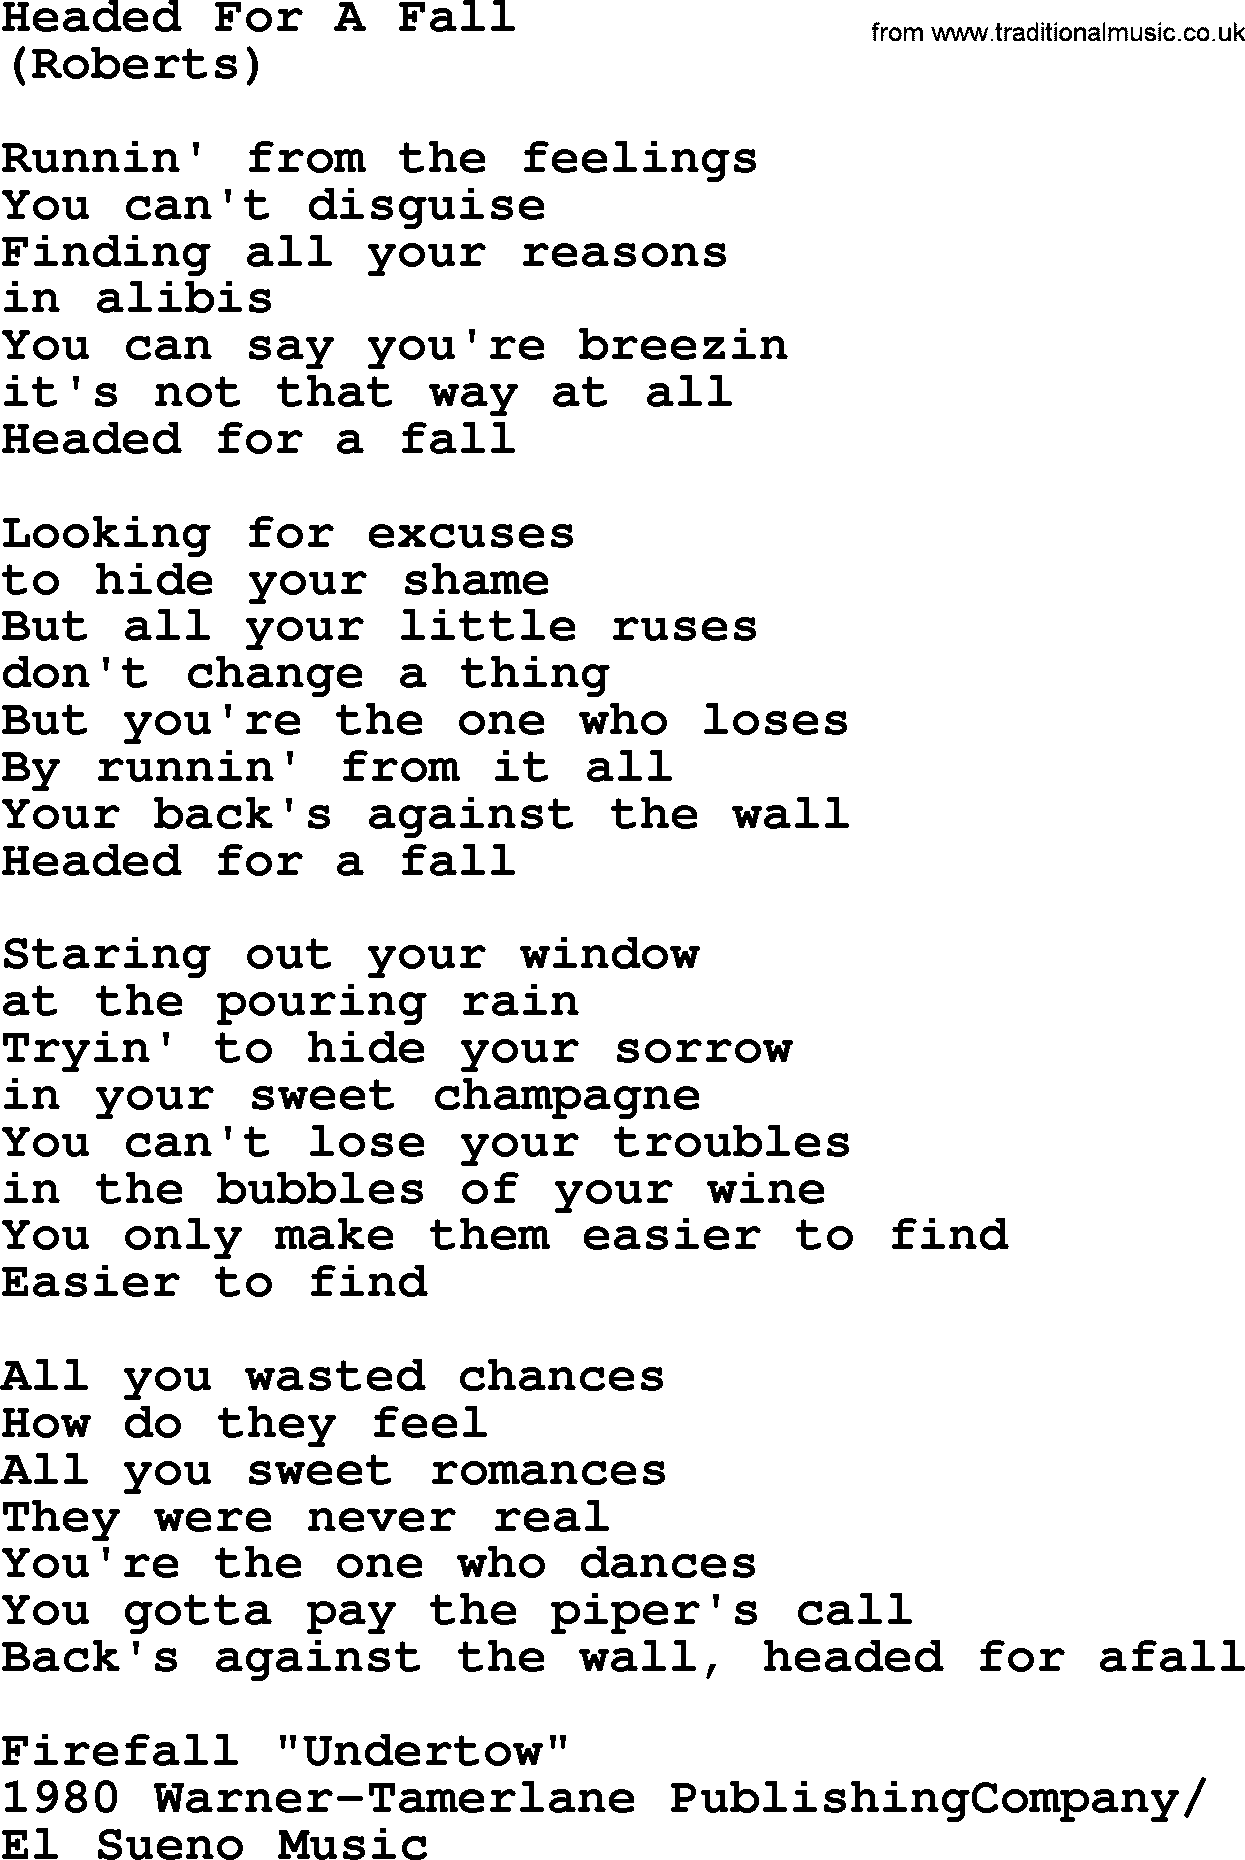 The Byrds song Headed For A Fall, lyrics